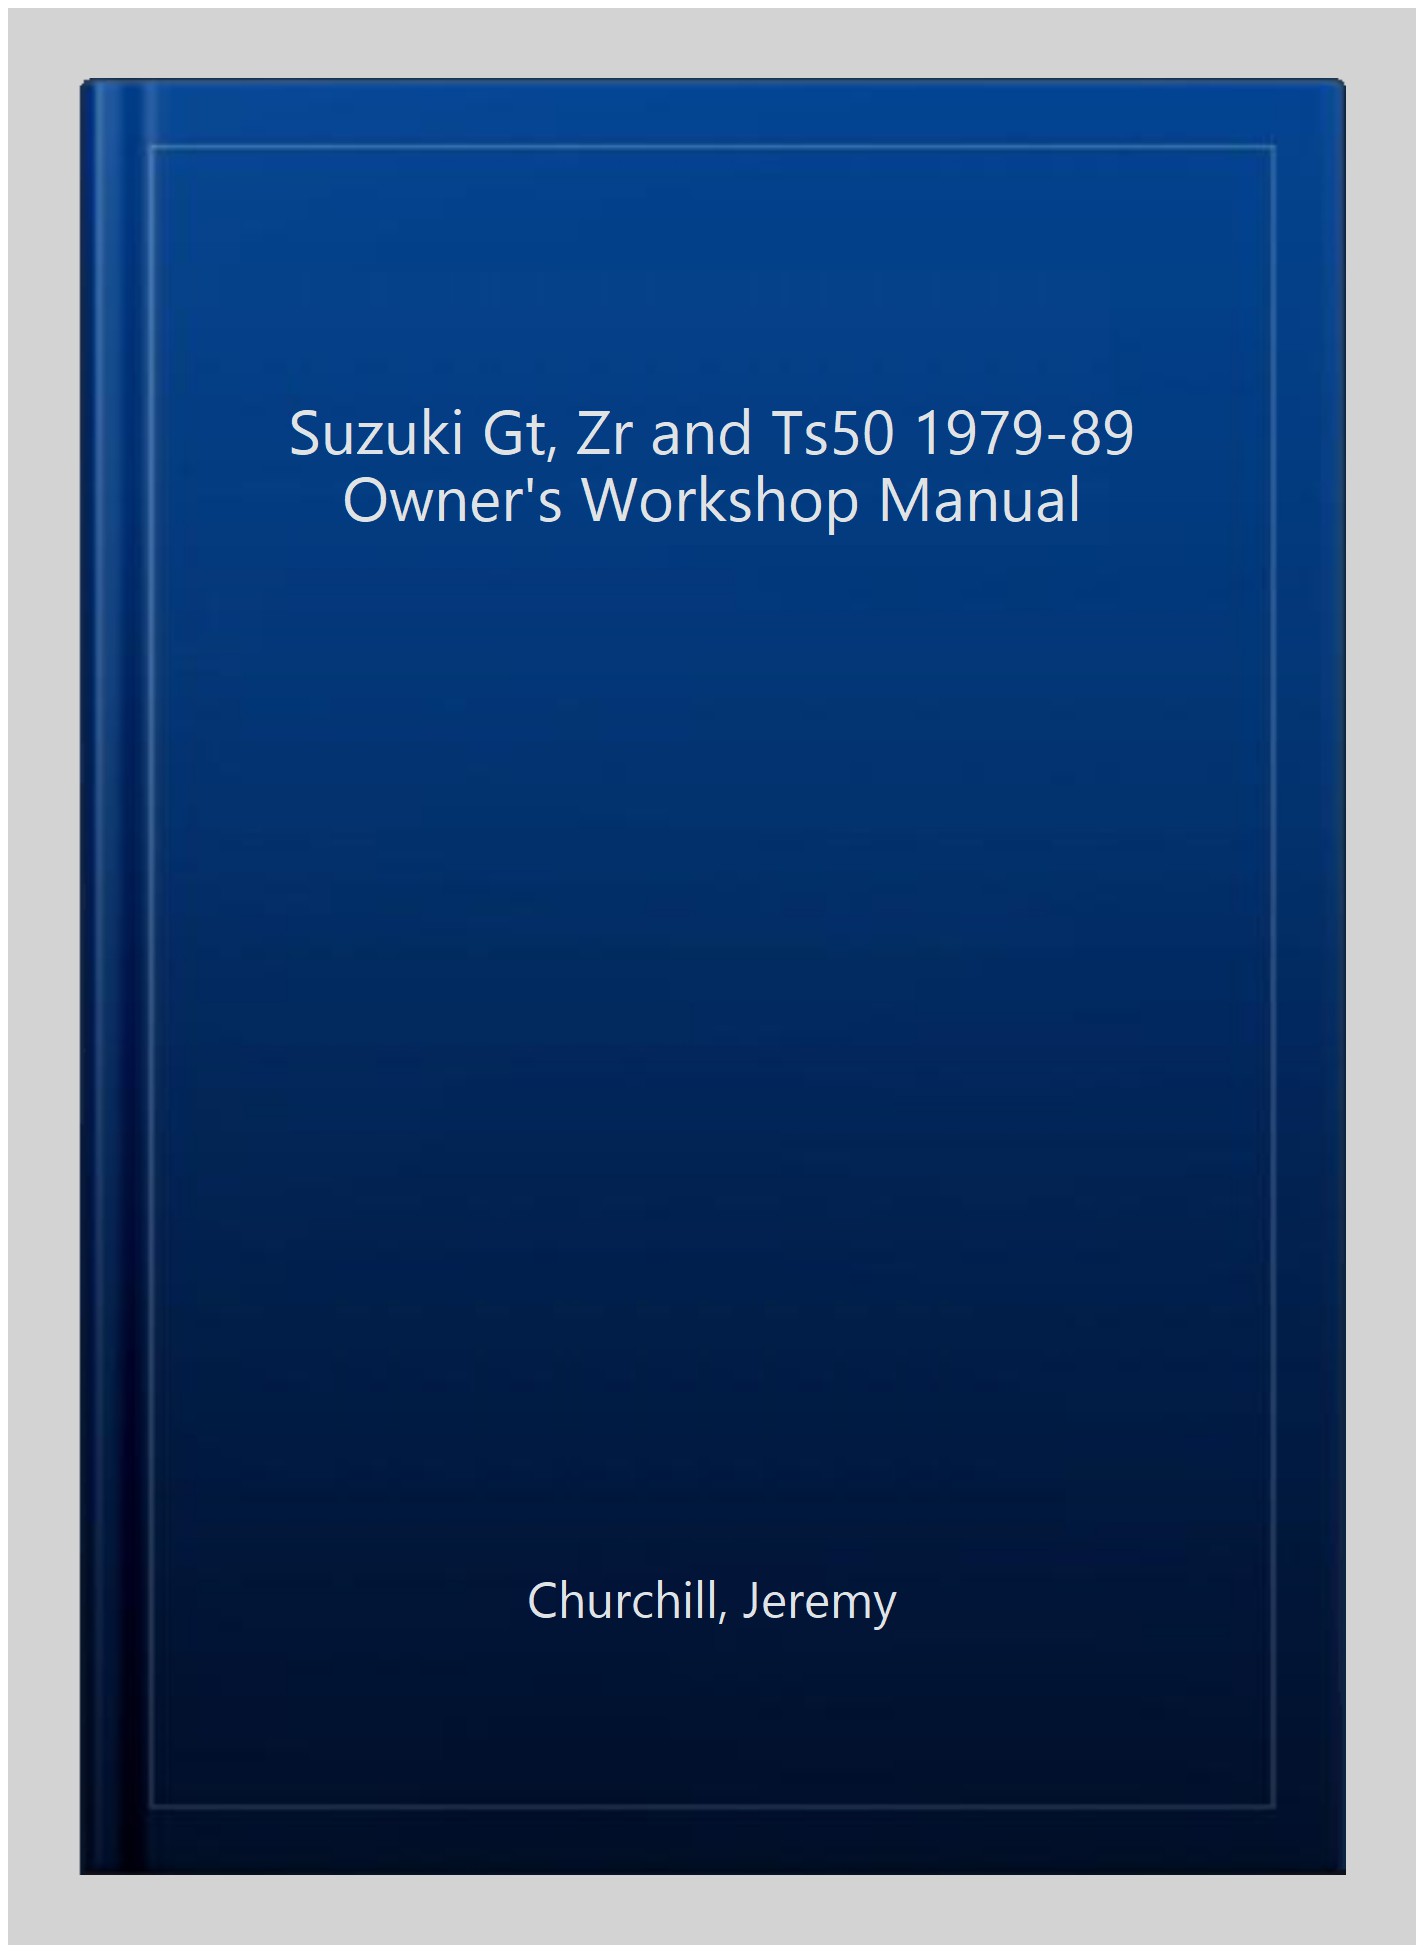 Suzuki Gt, Zr and Ts50 1979-89 Owner's Workshop Manual - Churchill, Jeremy